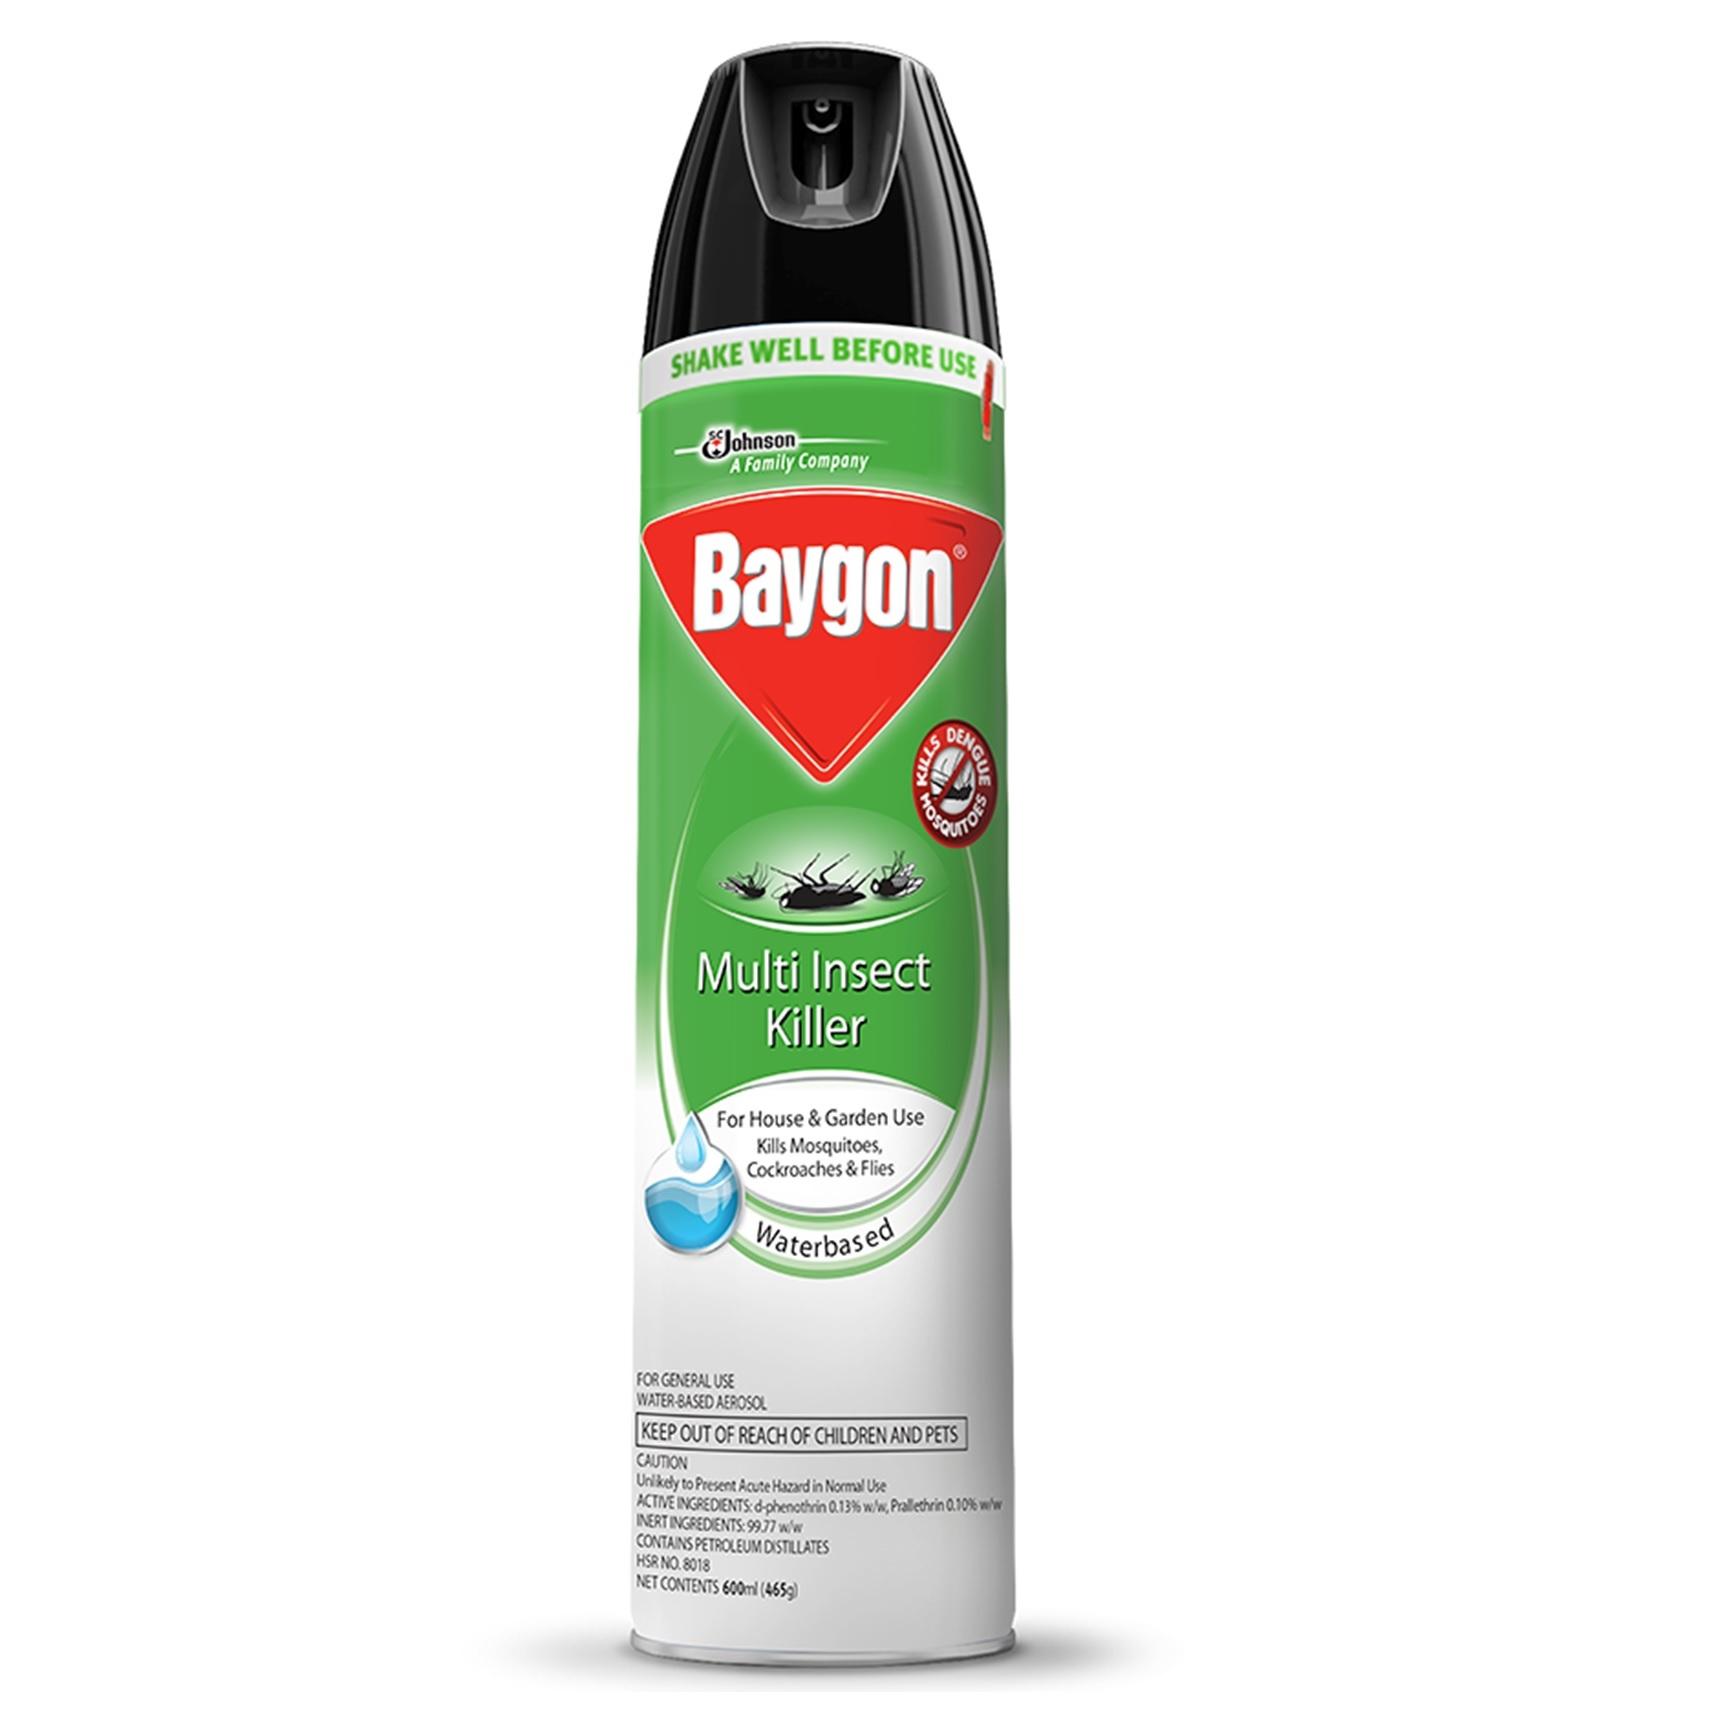 Baygon cockroach spray.